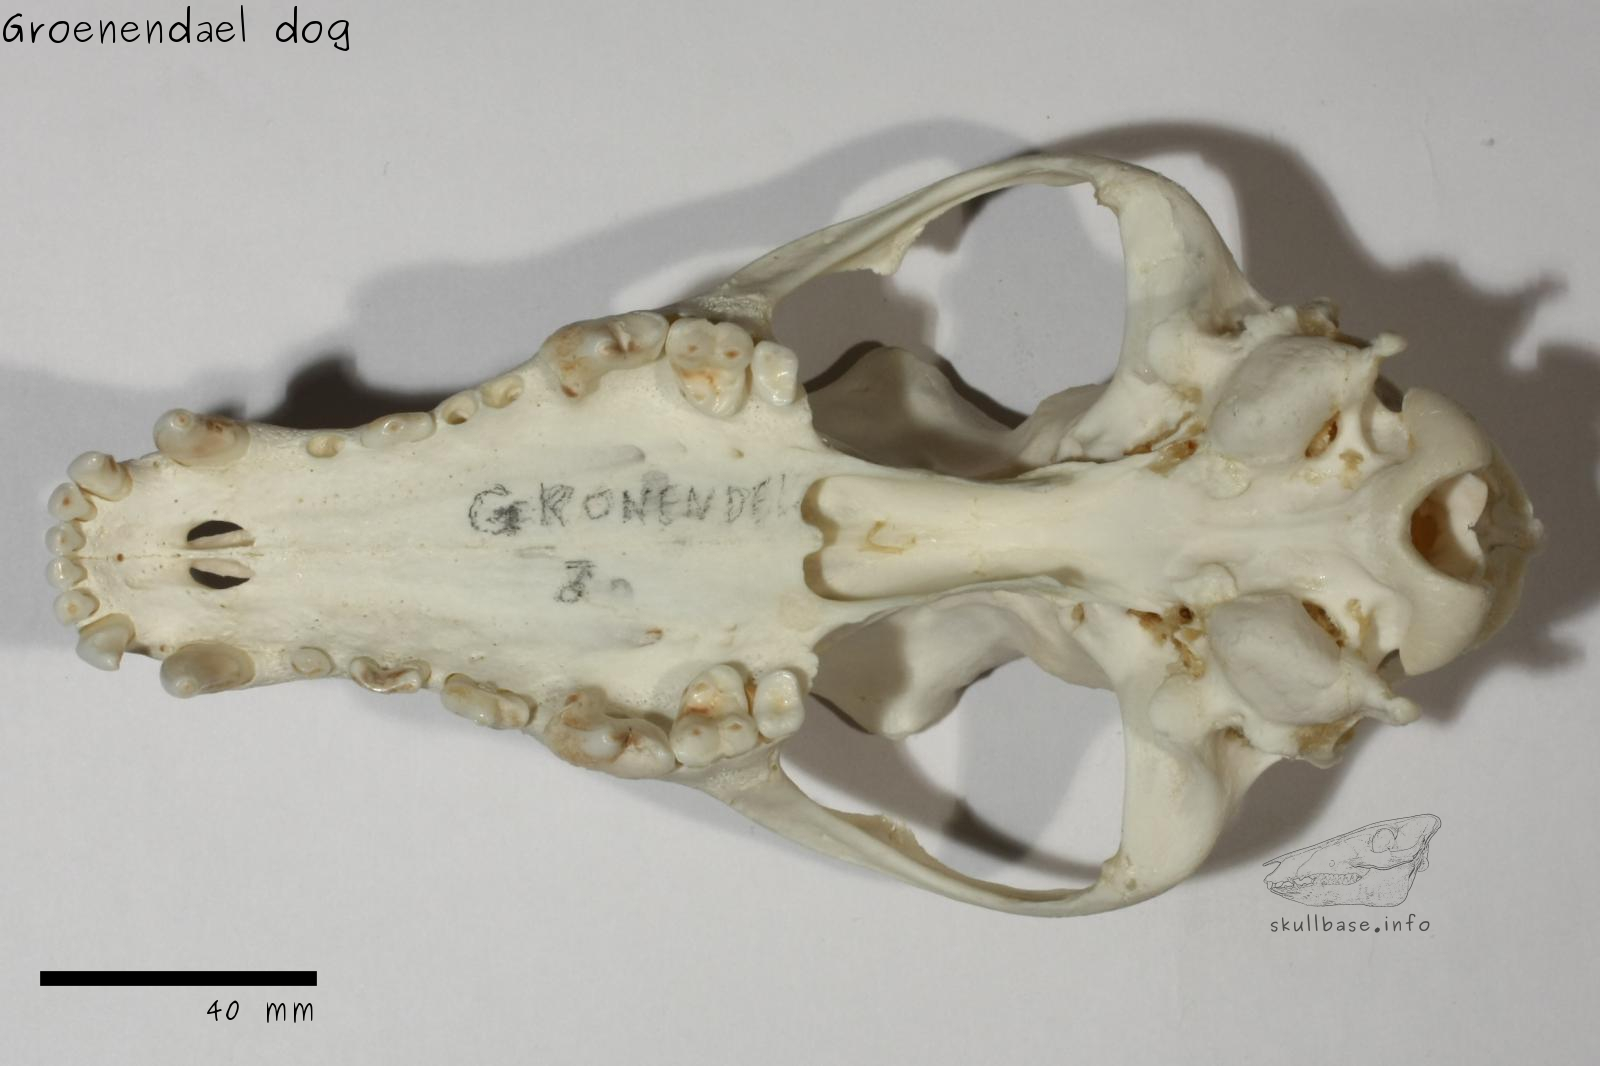 Groenendael dog (Canis lupus familiaris) skull ventral view